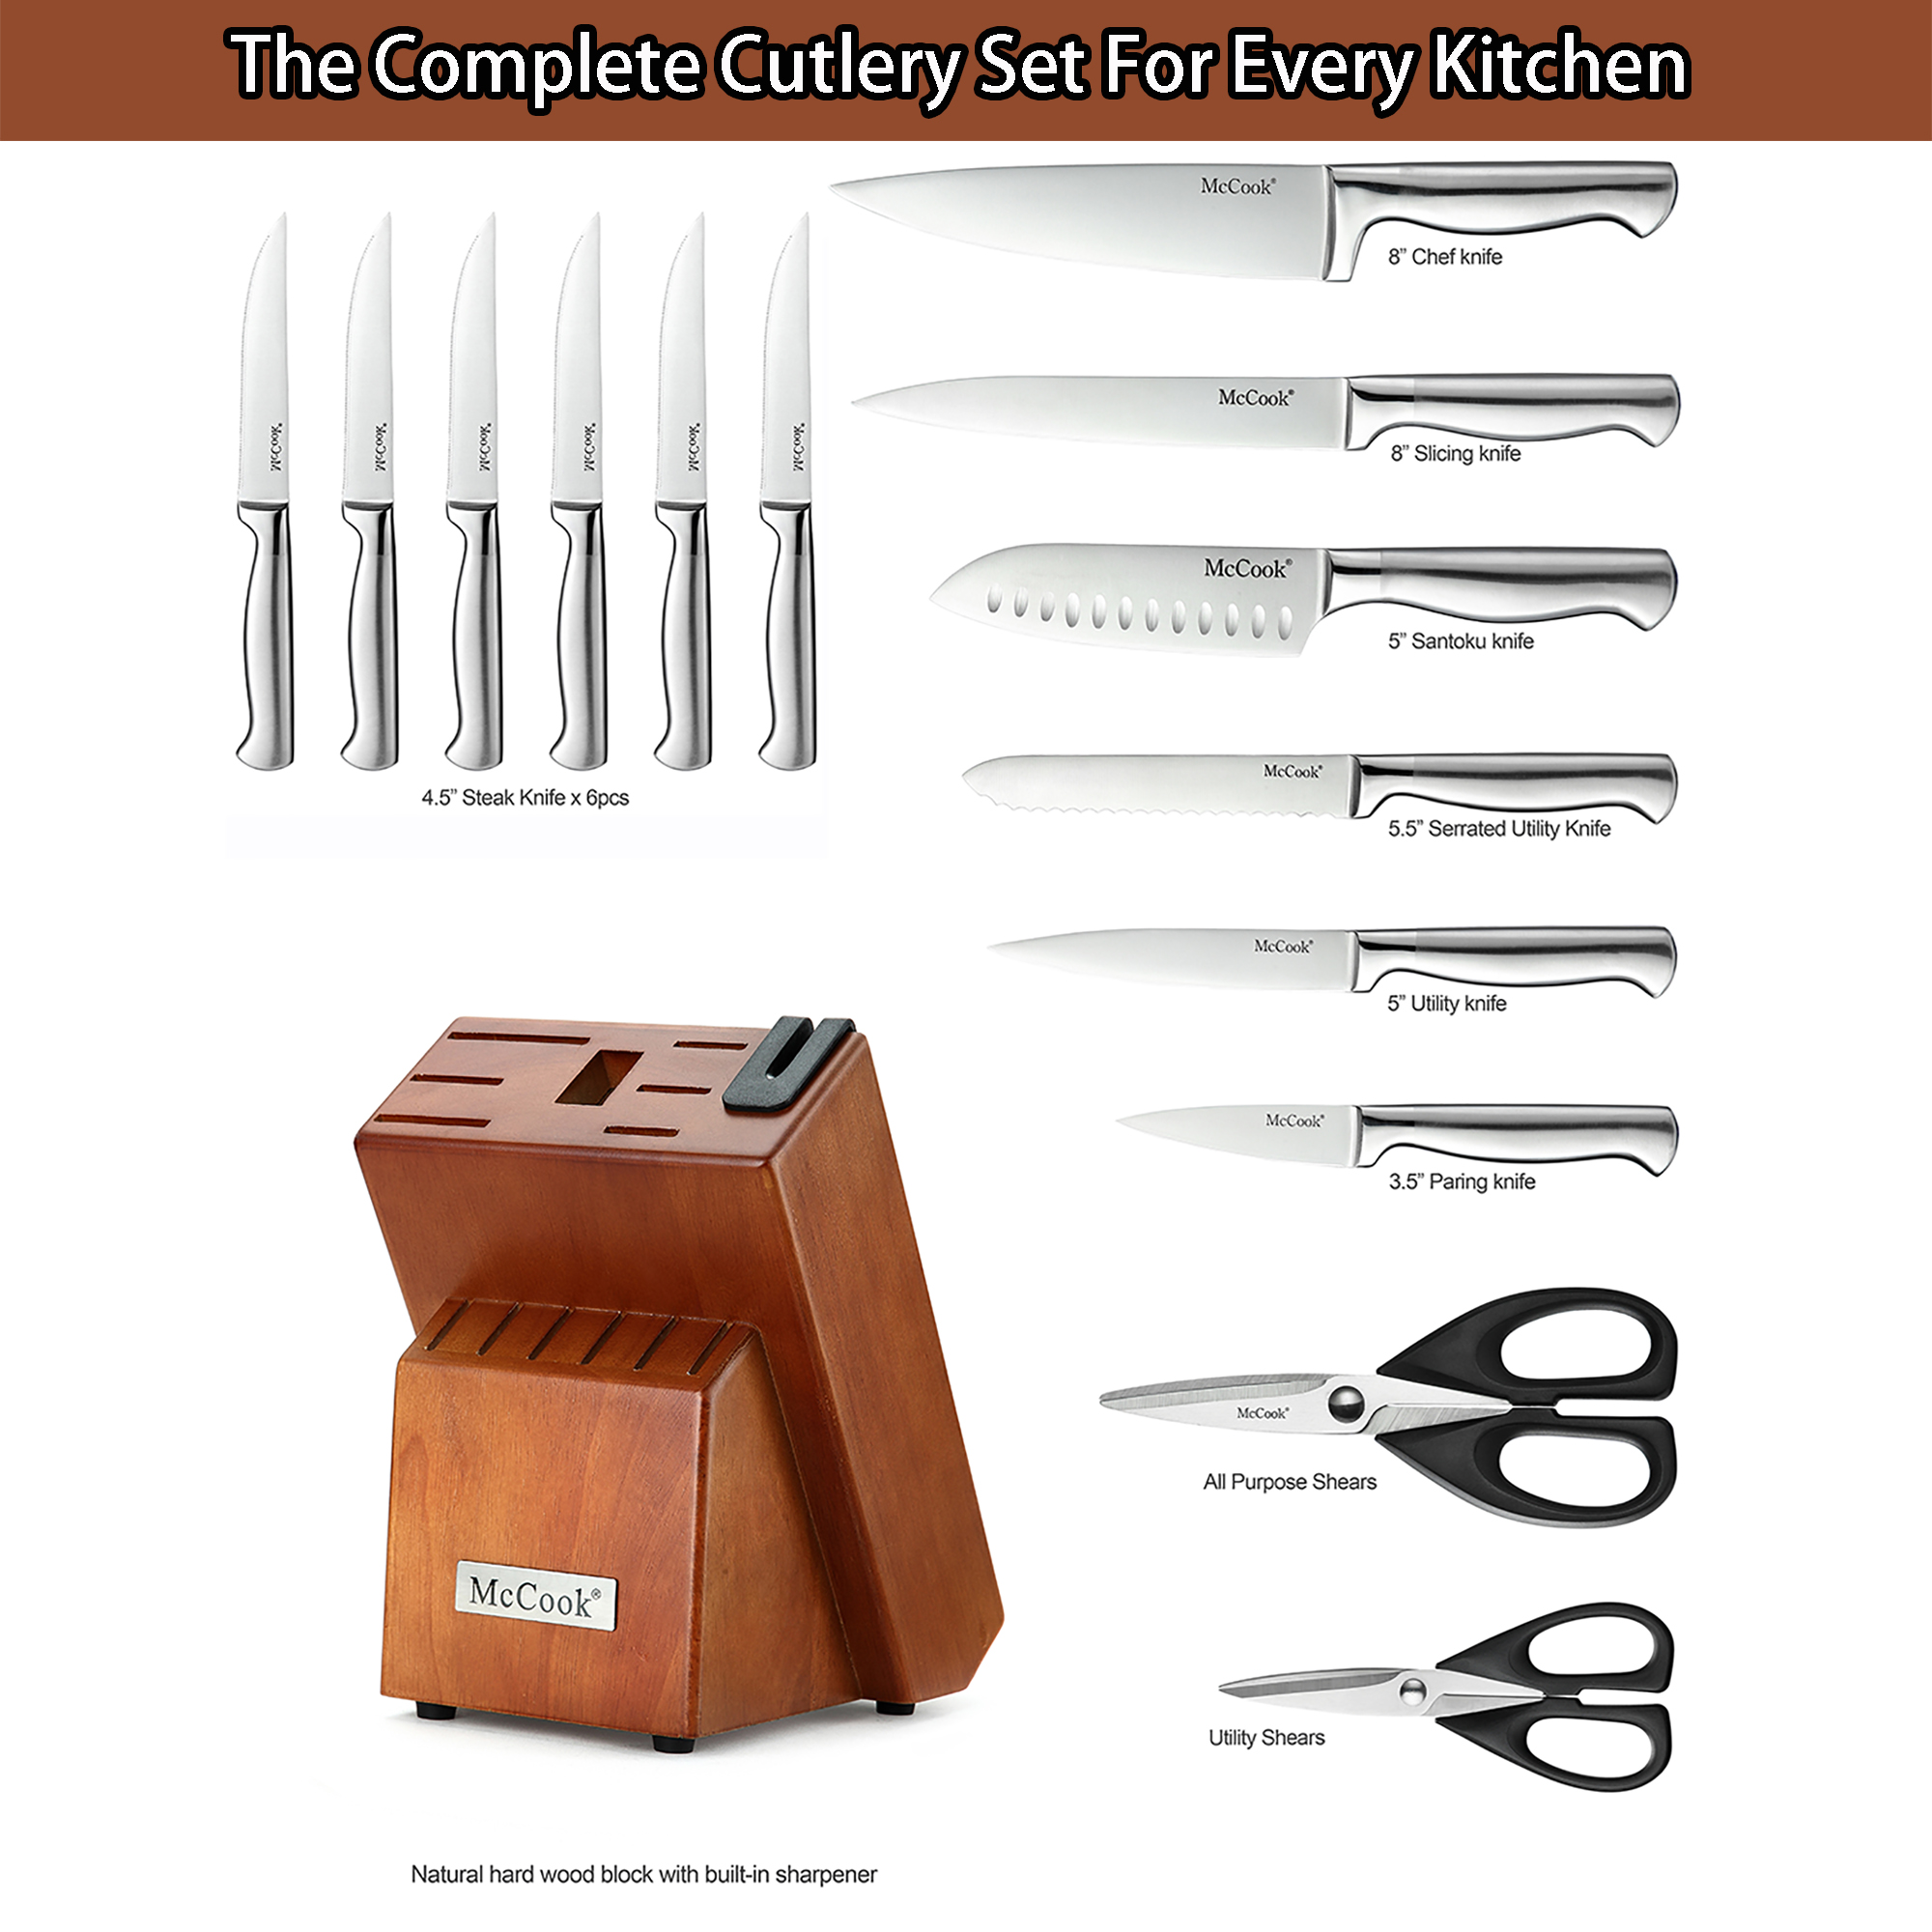 McCook MC29 15-Piece Kitchen Cutlery Knife Block Set Built-in Sharpener Stainless Steel - image 3 of 11